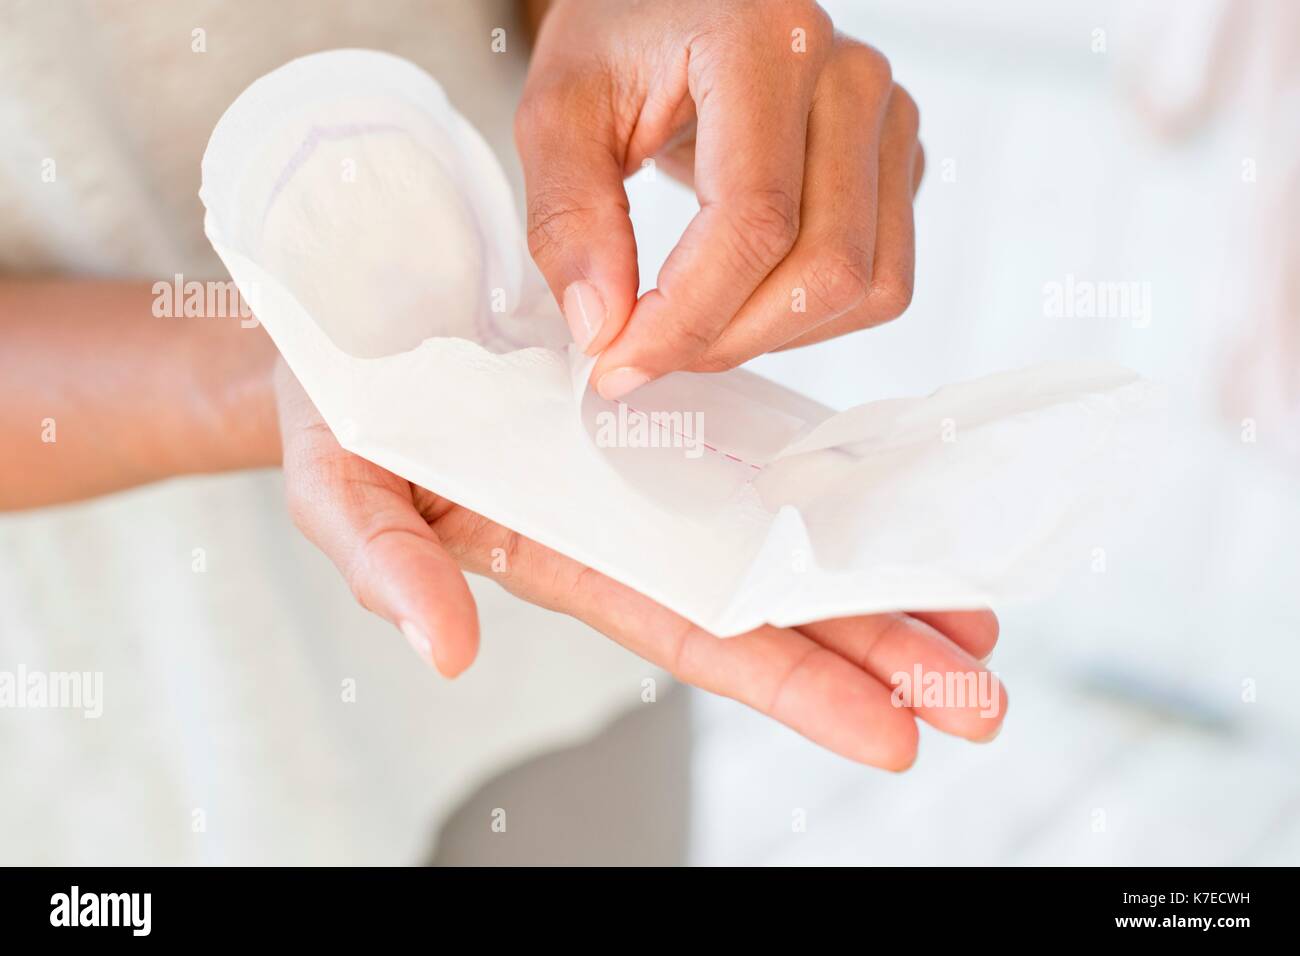 Woman holding sanitary towel. Stock Photo